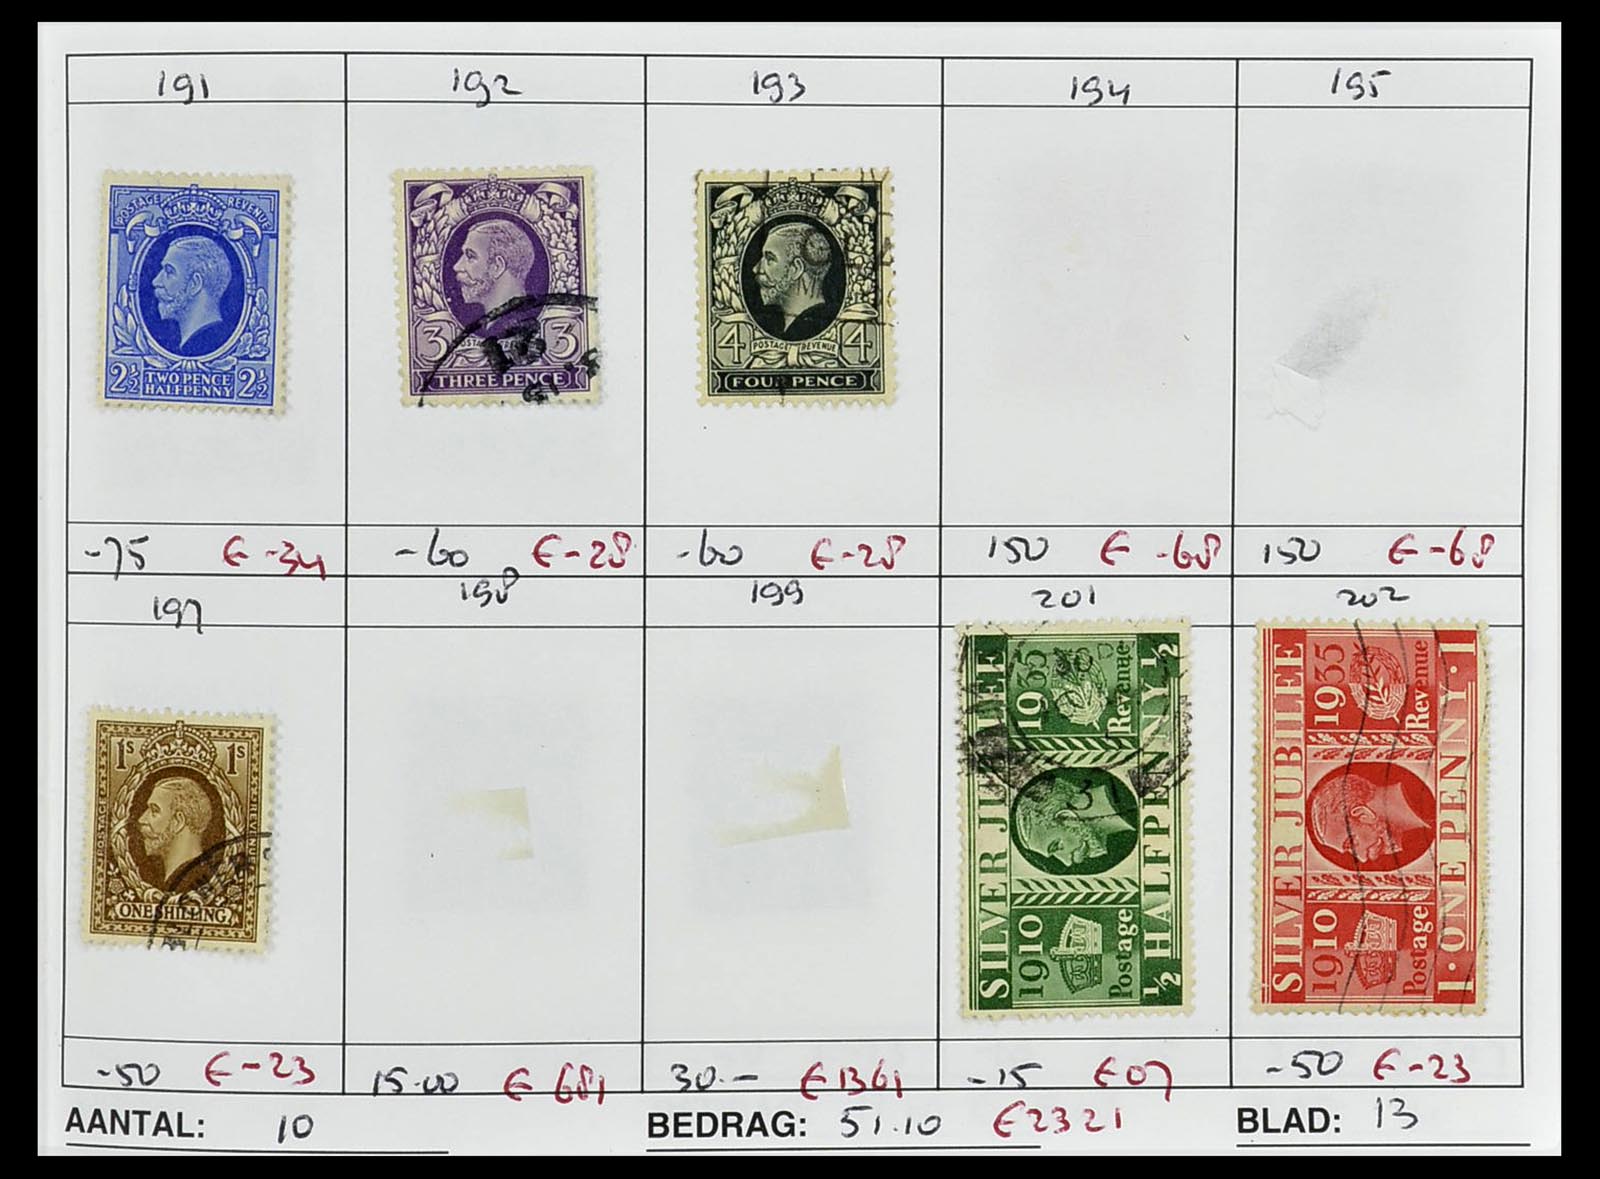 34612 0090 - Stamp Collection 34612 Wereld rondzendboekjes.